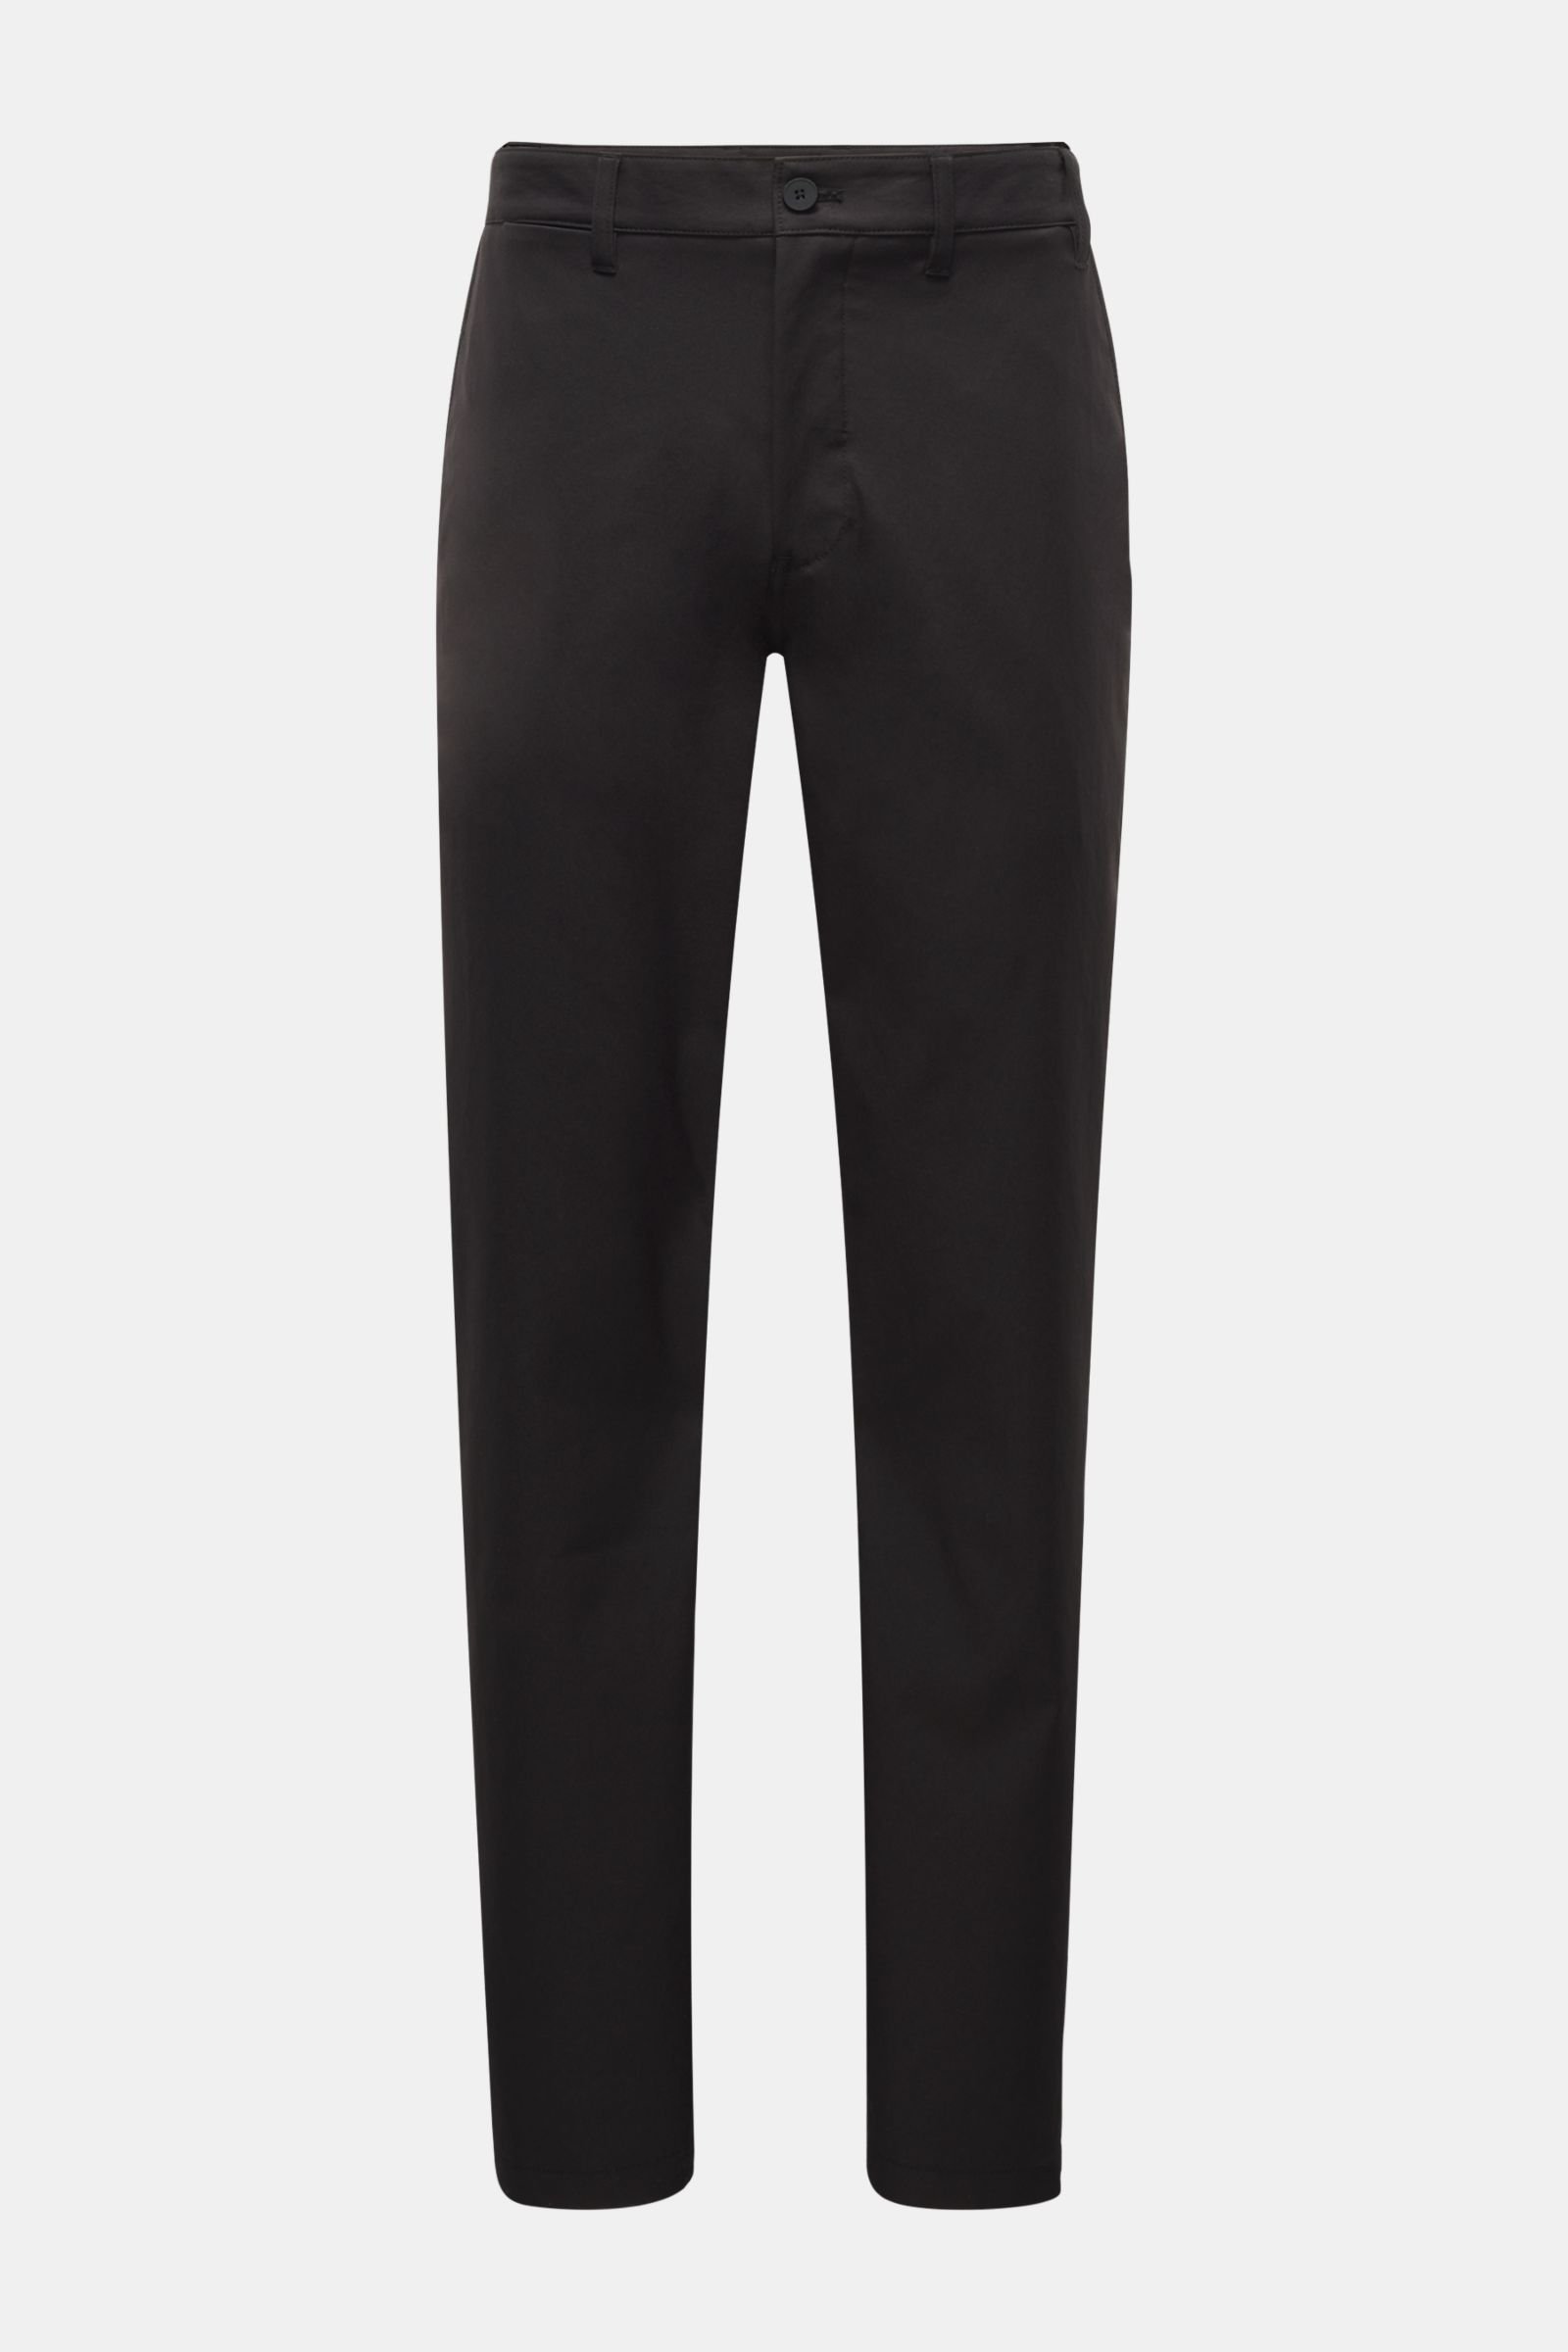 NORSE PROJECTS trousers 'Aros Solotex Chino' black | BRAUN Hamburg